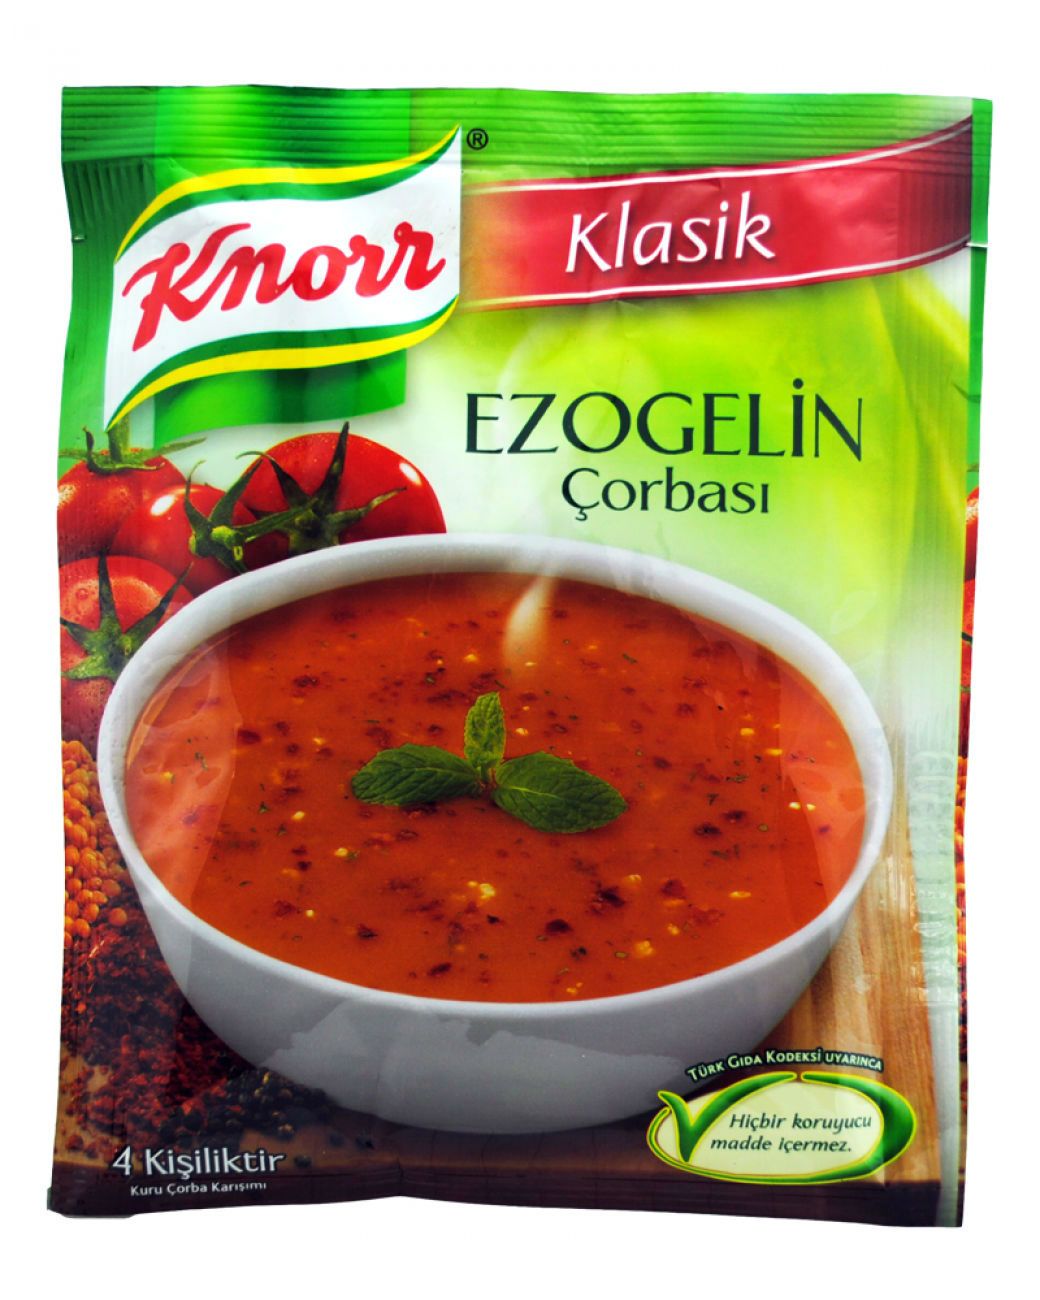 Knorr Ezogelin Corbasi Soup (65G) - Aytac Foods